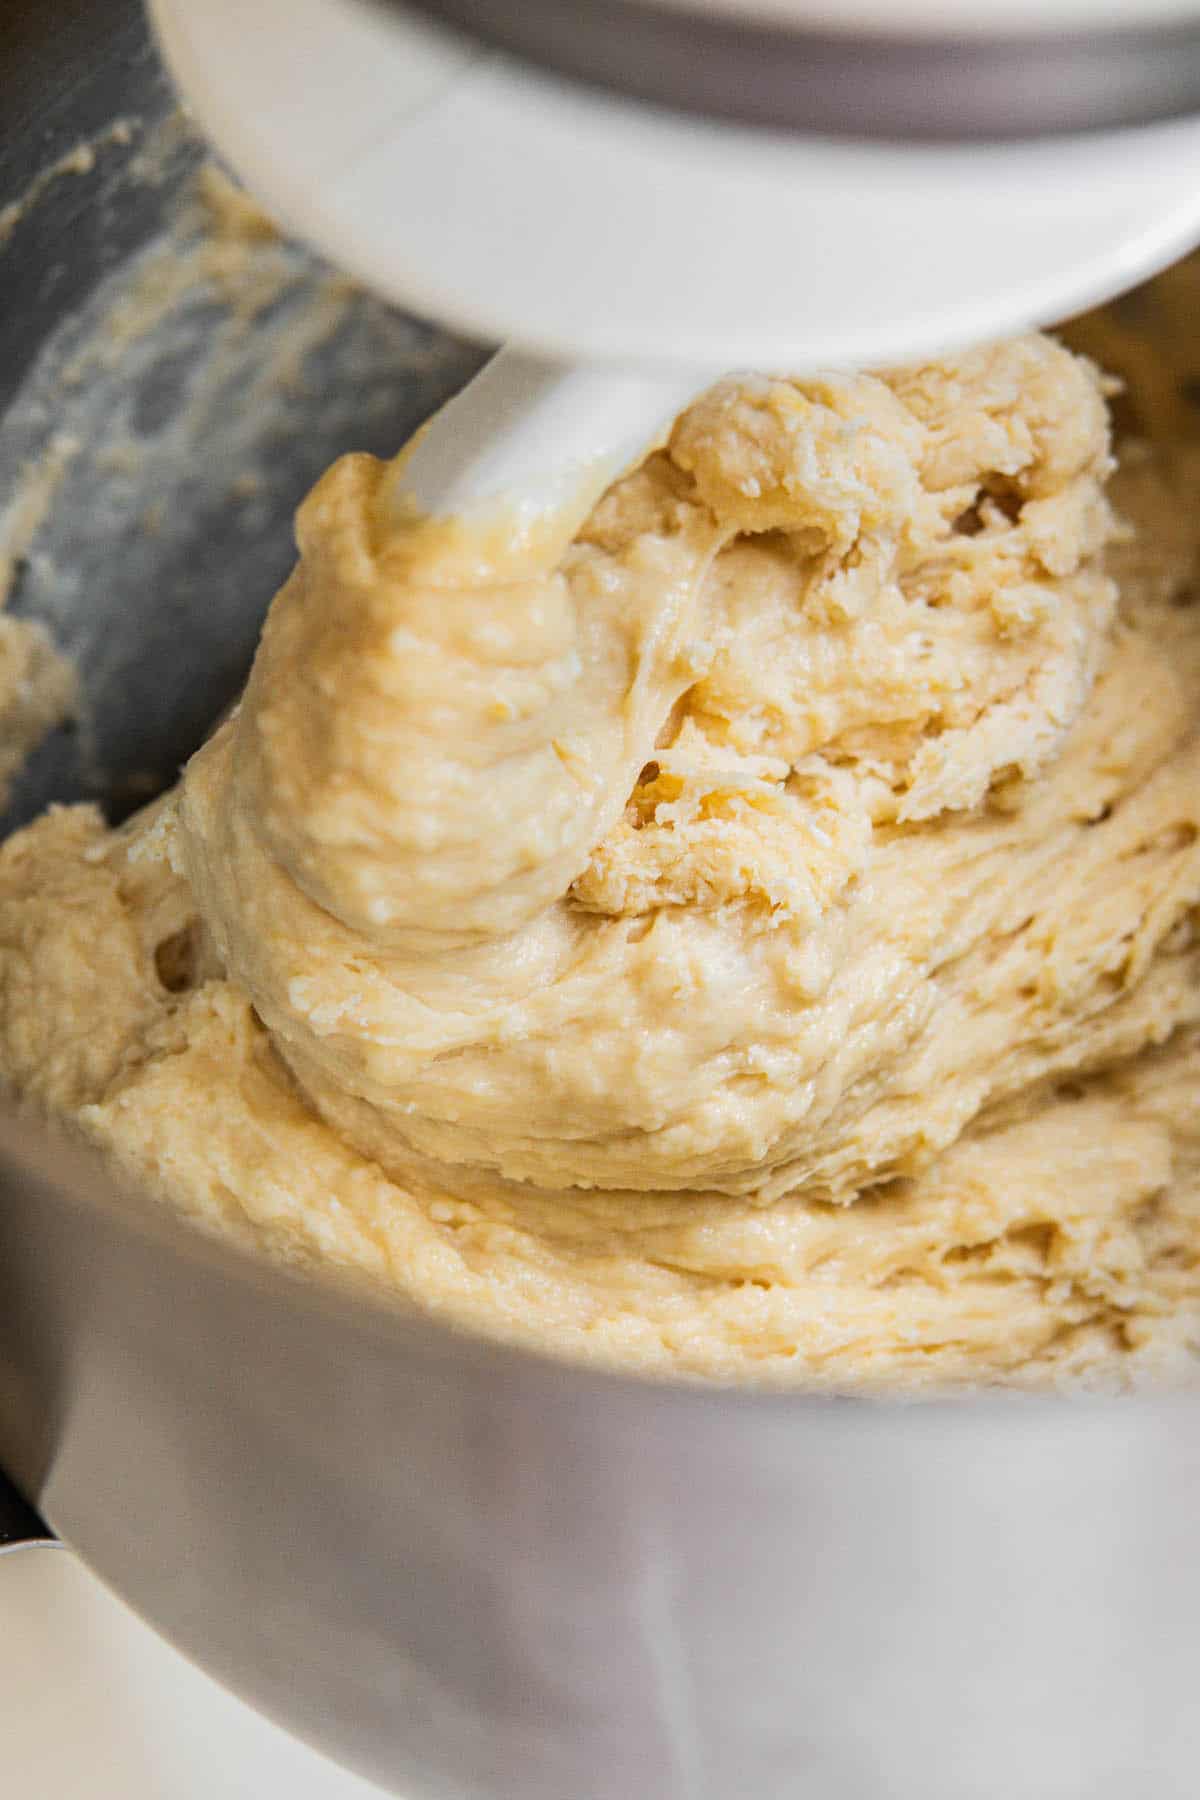 shaggy dough being mixed.